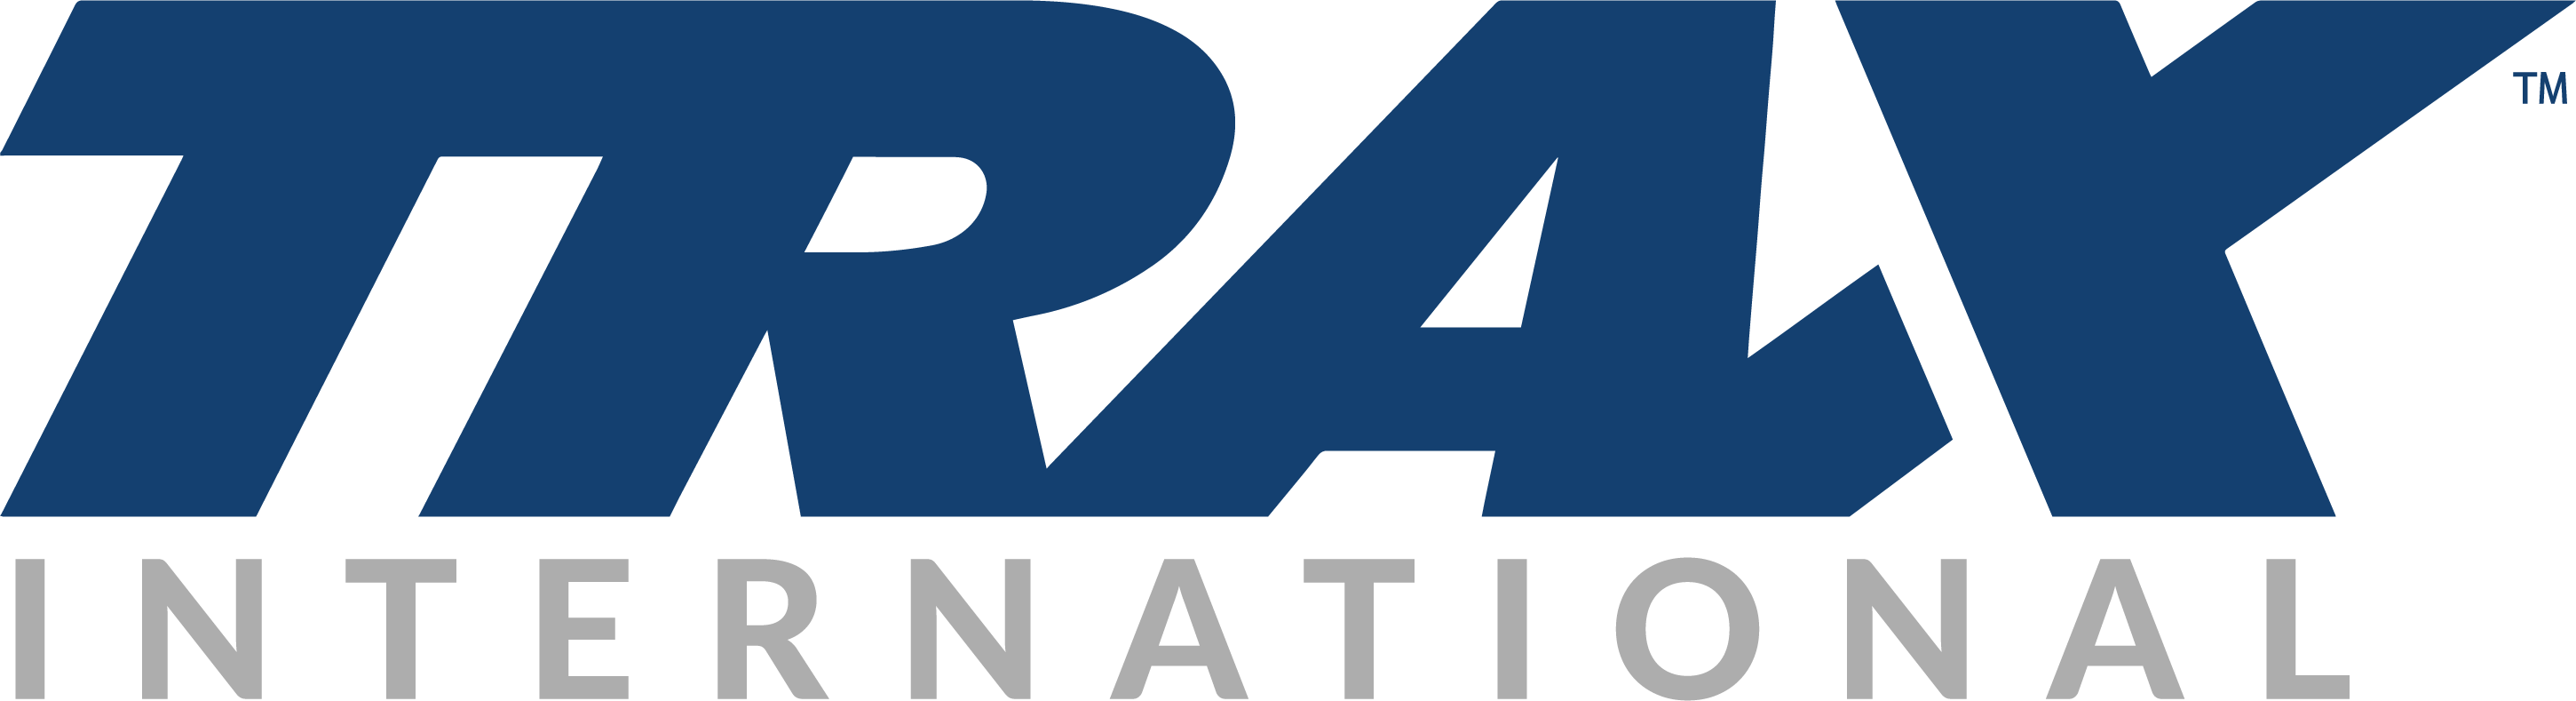 TRAX Logo 2020 V4 color.png